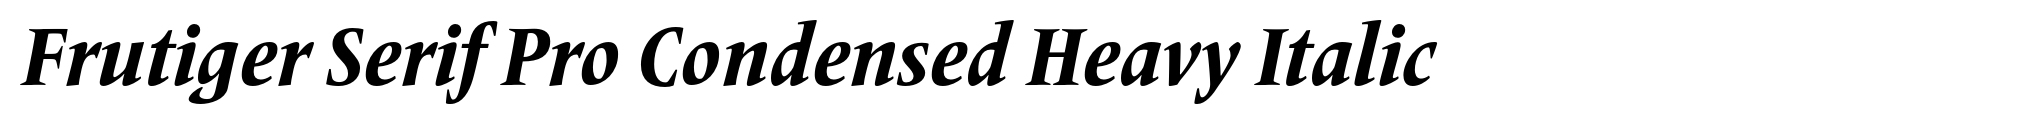 Frutiger Serif Pro Condensed Heavy Italic image